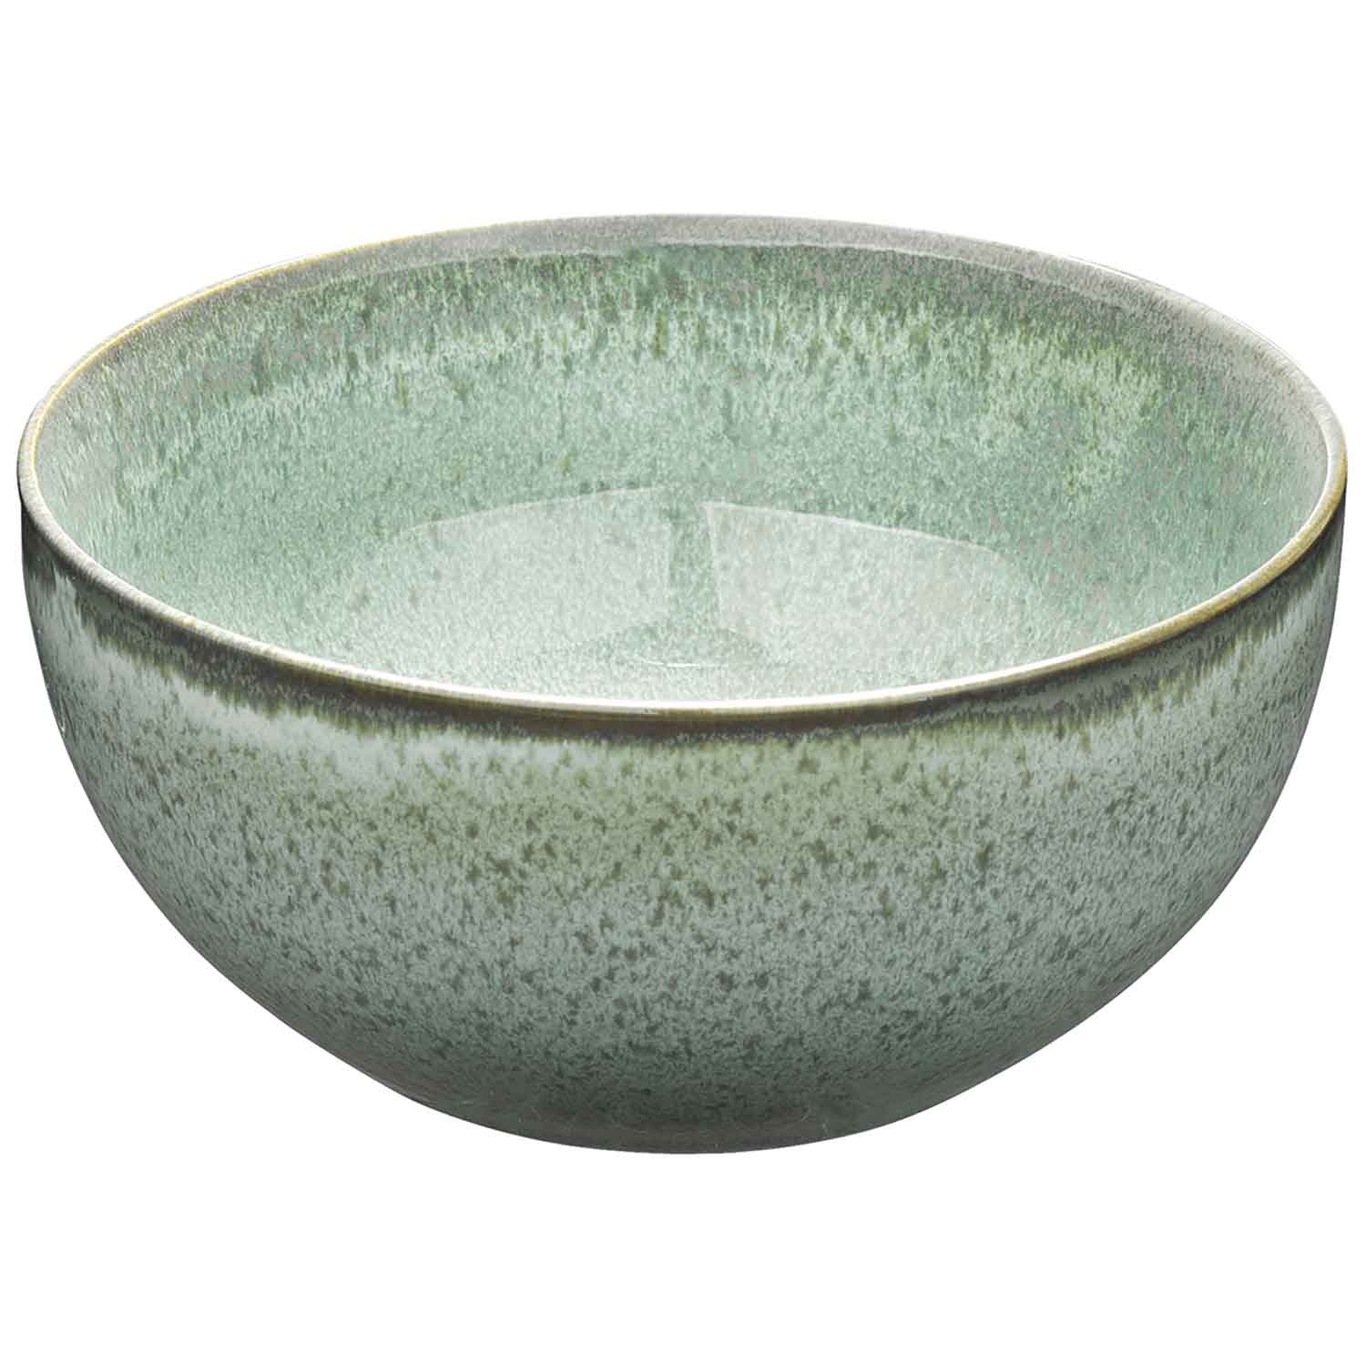 Ceramic Workshop Bowl 15 cm, Lark